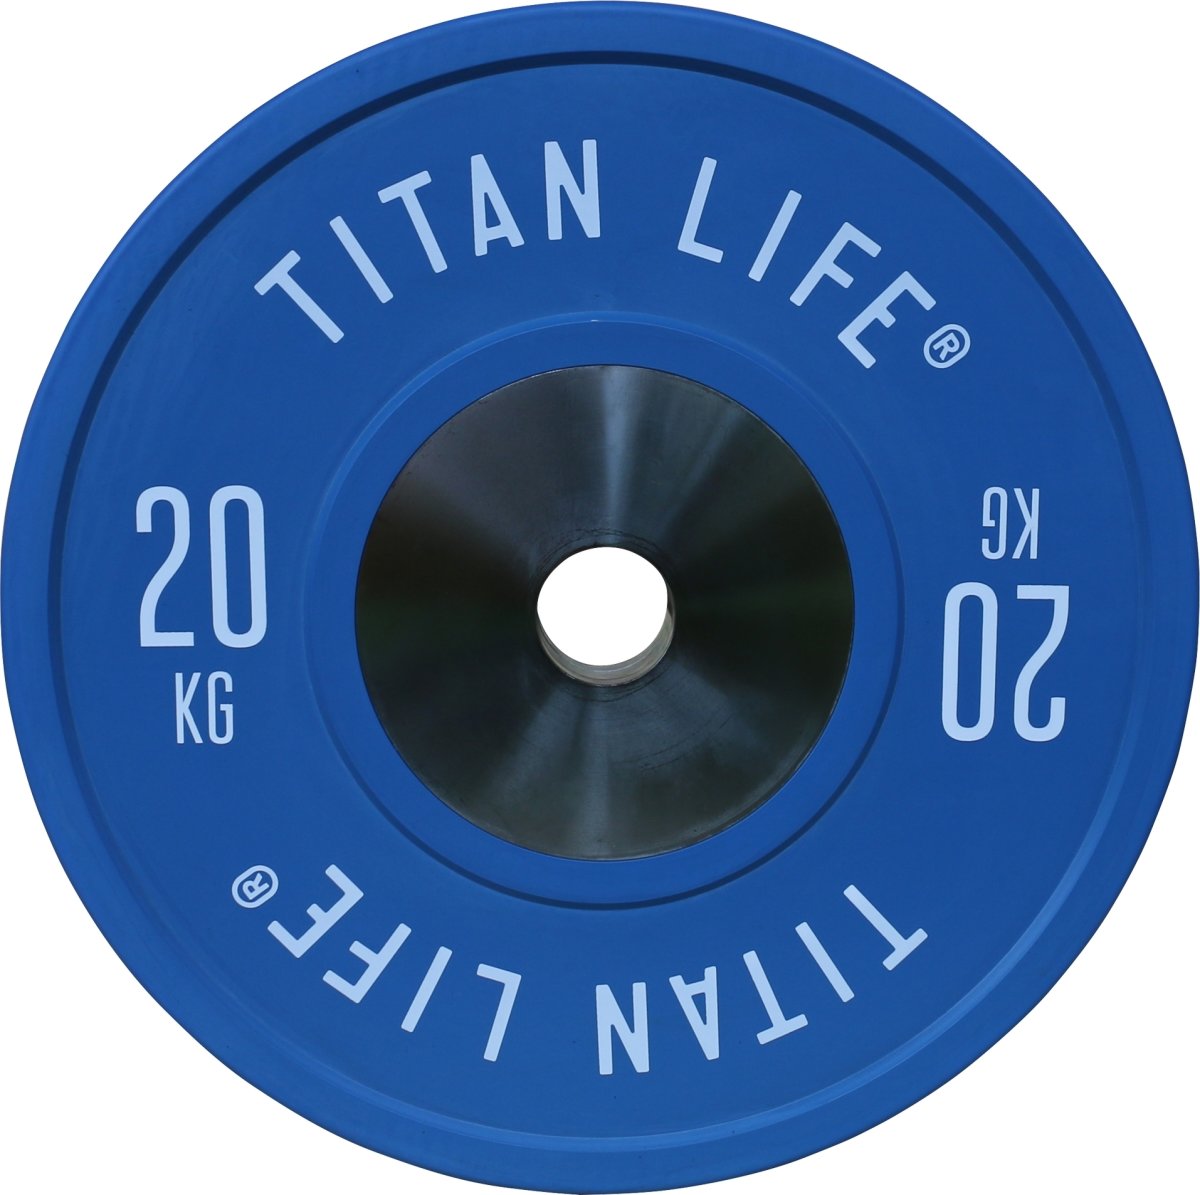 Titan Life Elite bumper plate, 20 kg